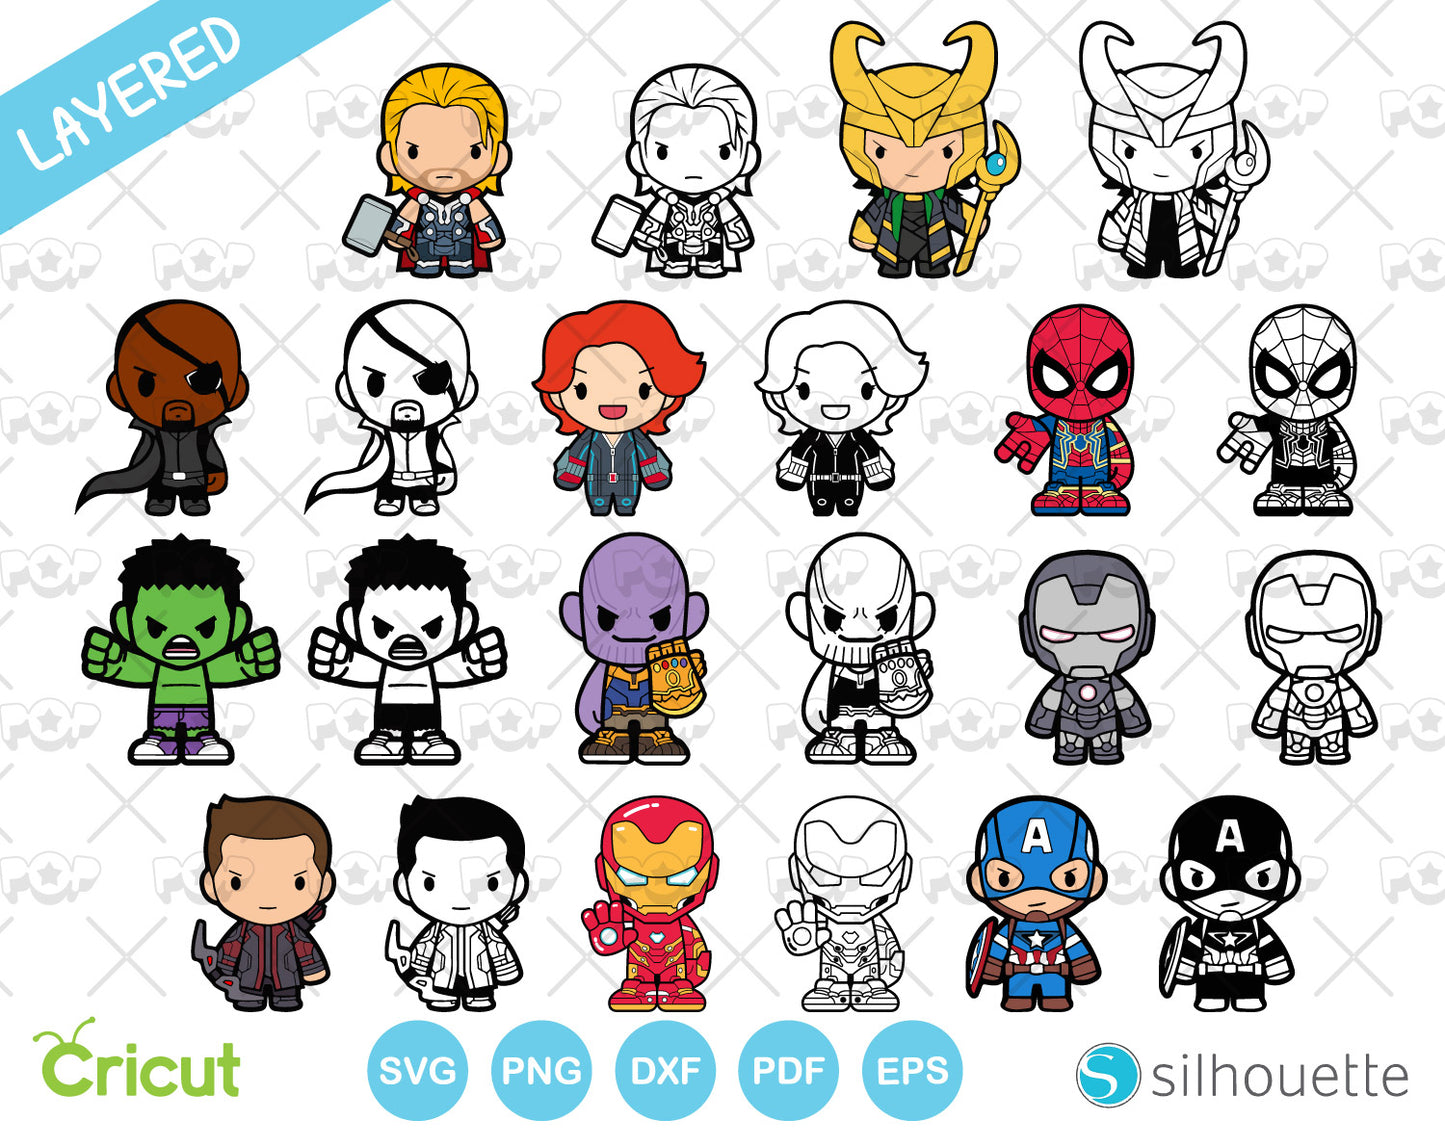 Chibi Avengers clipart set, Marvel SVG cut files for Cricut / Silhouette, PNG, DXF, instant download